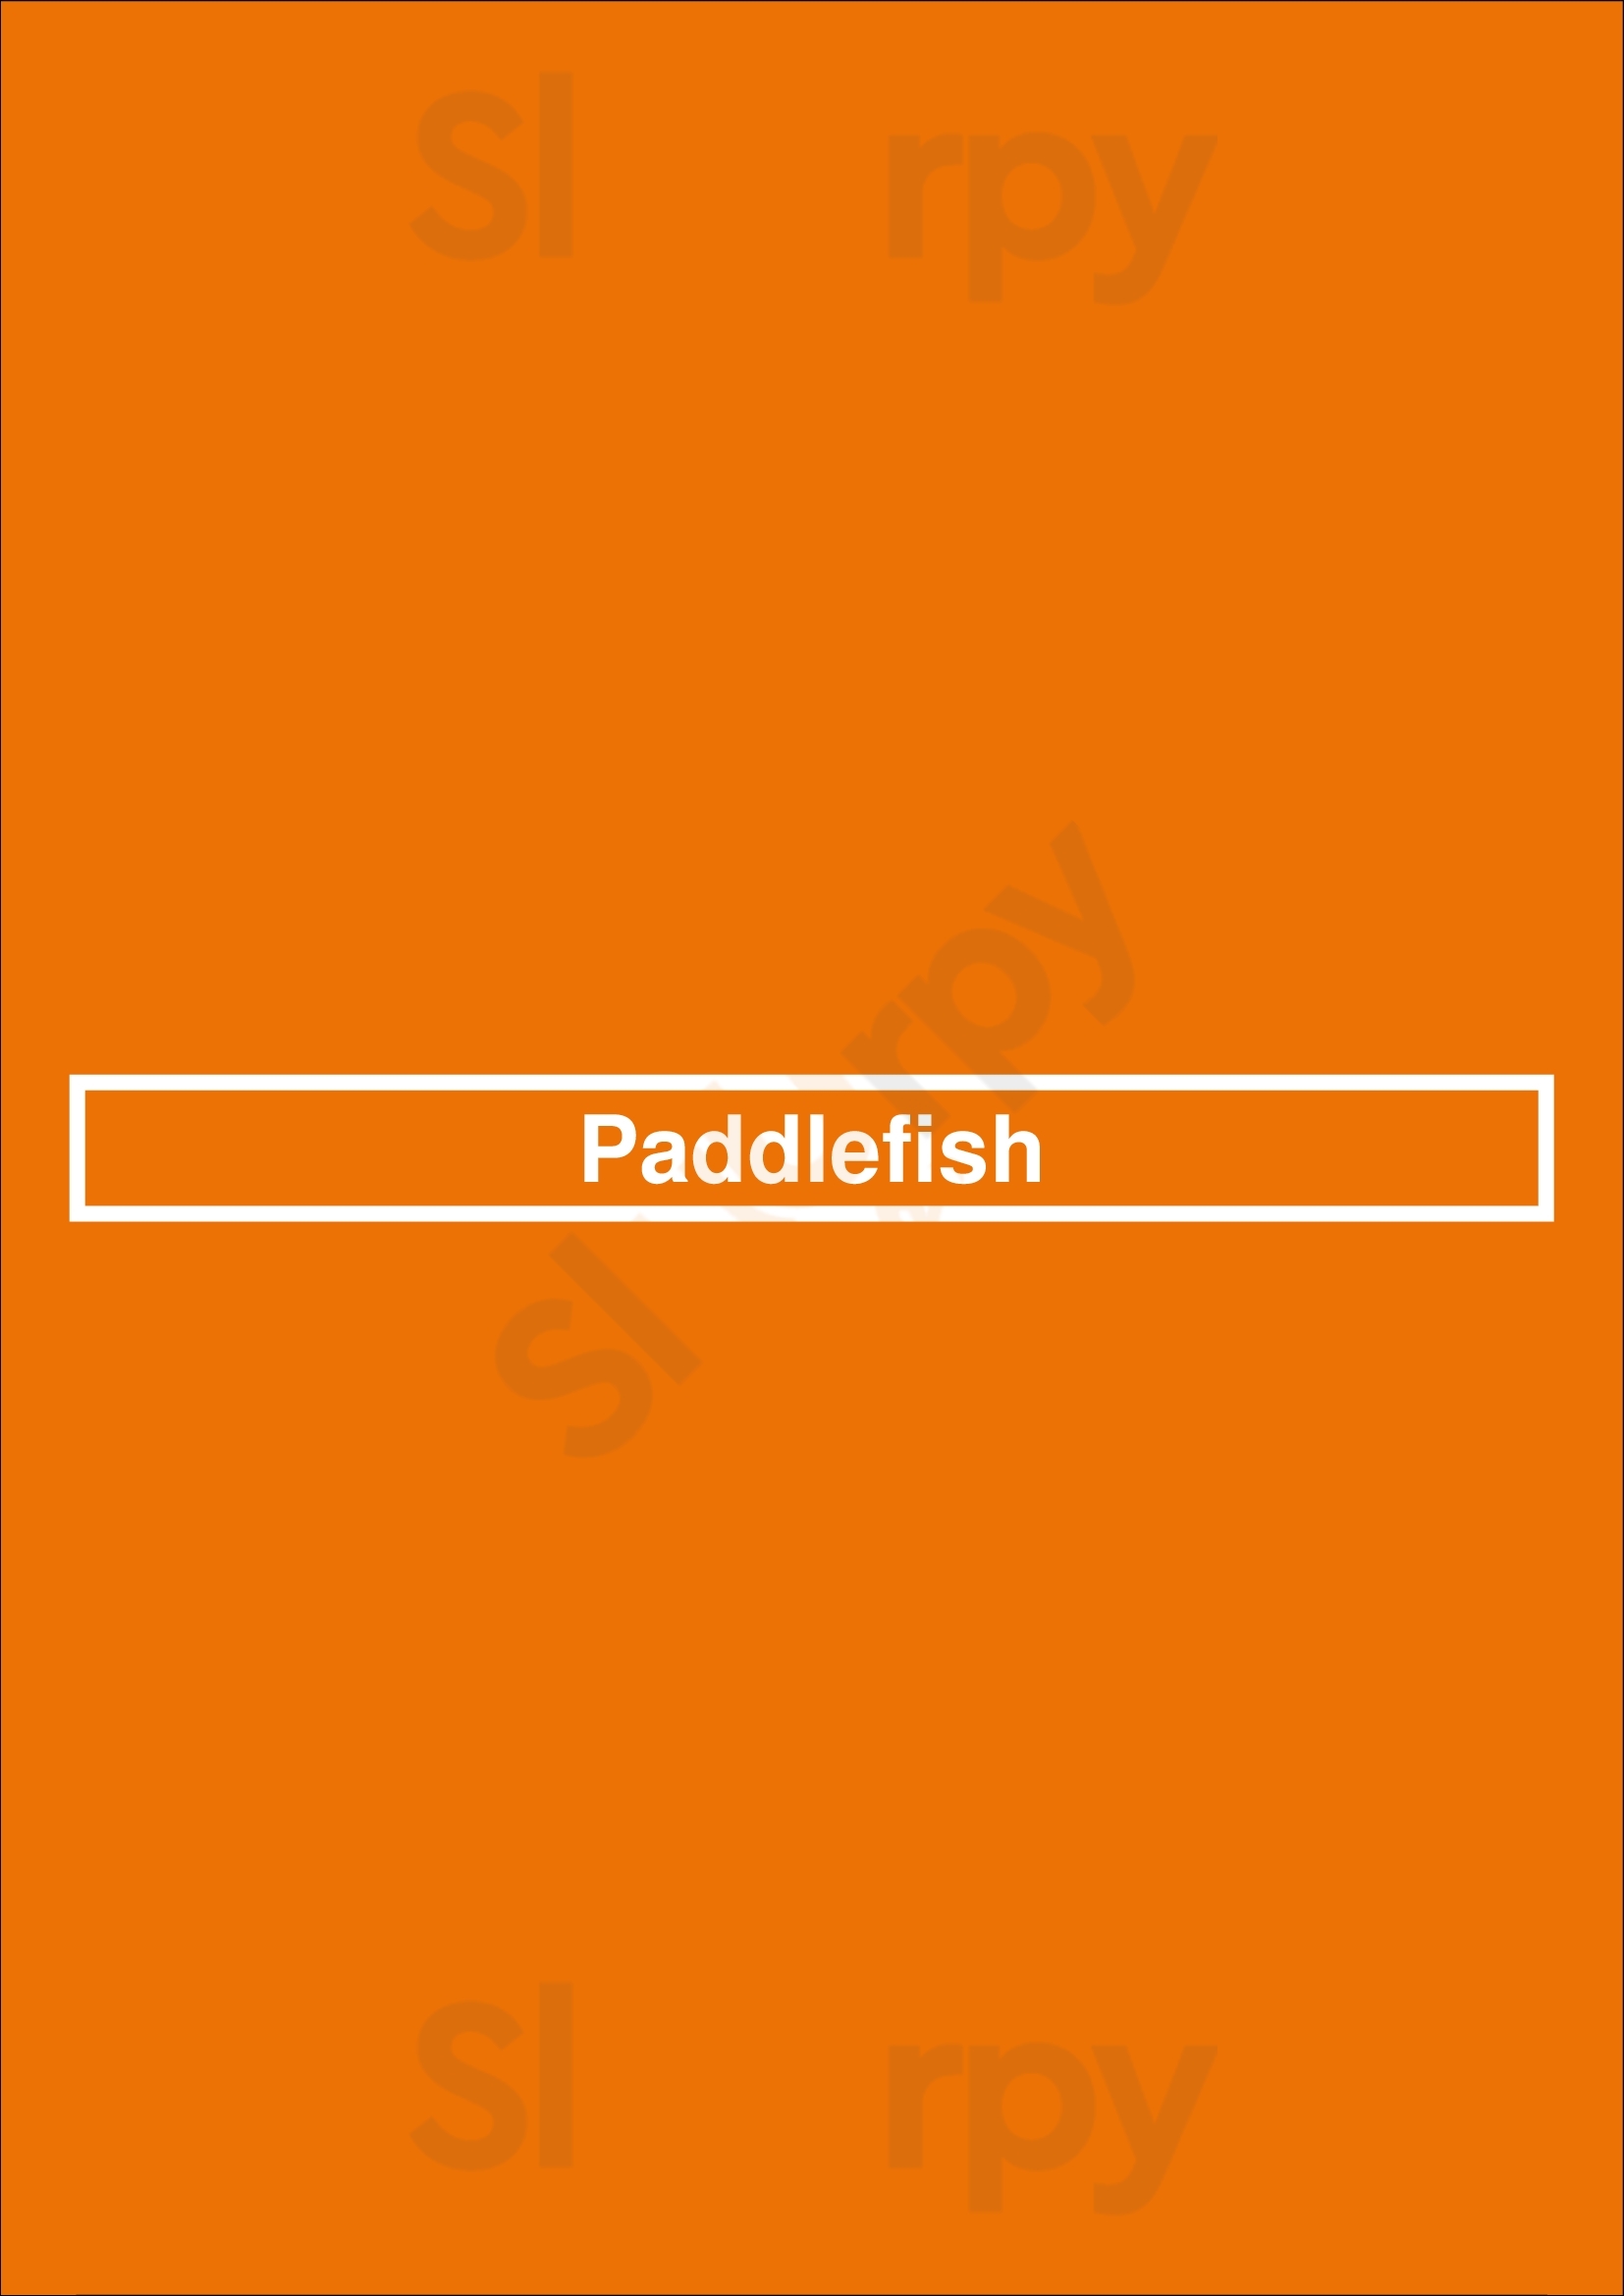 Paddlefish Orlando Menu - 1